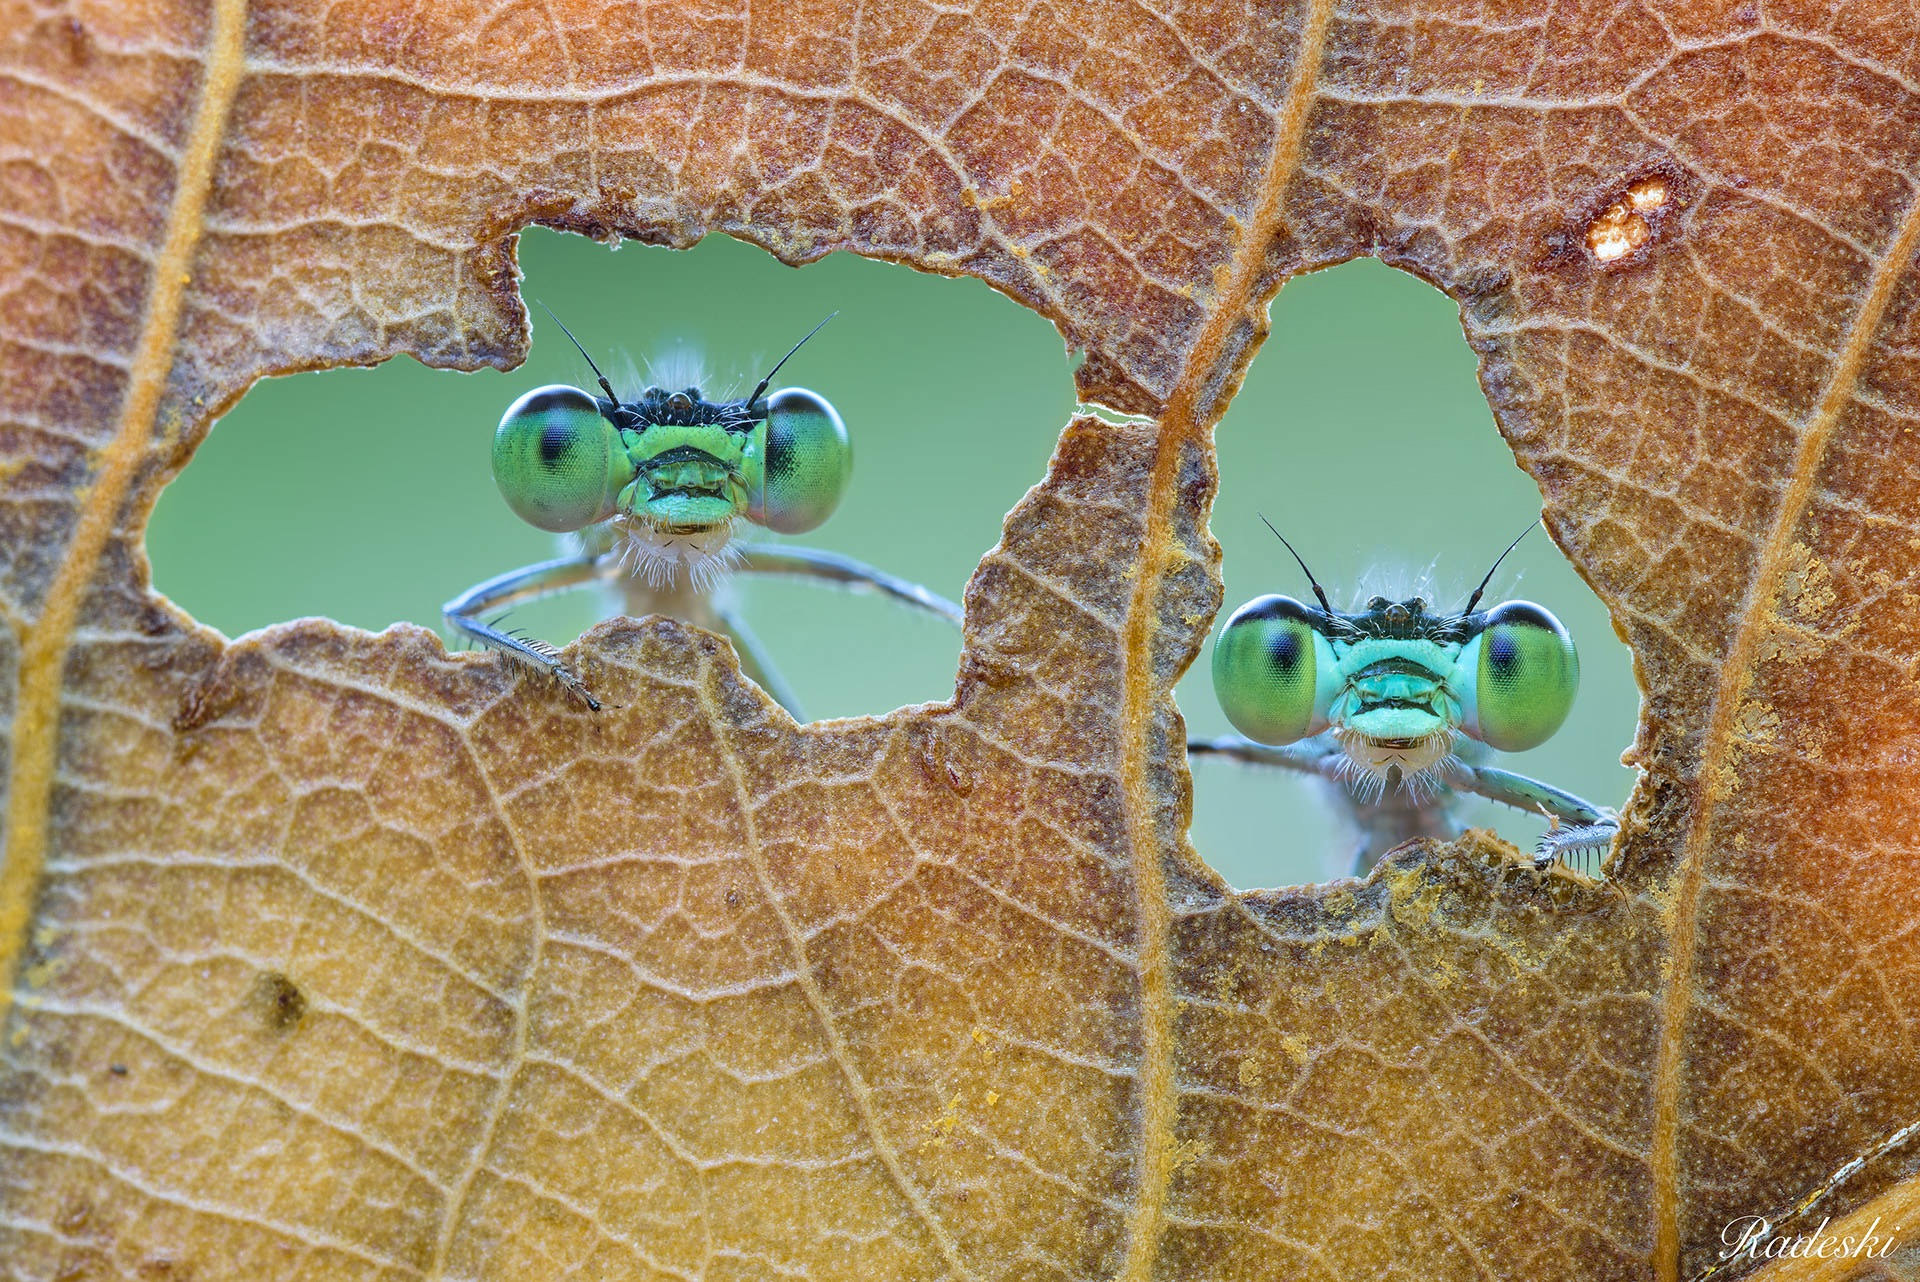 monday morning randomness - bugs looking through leaf holes - Radeshi